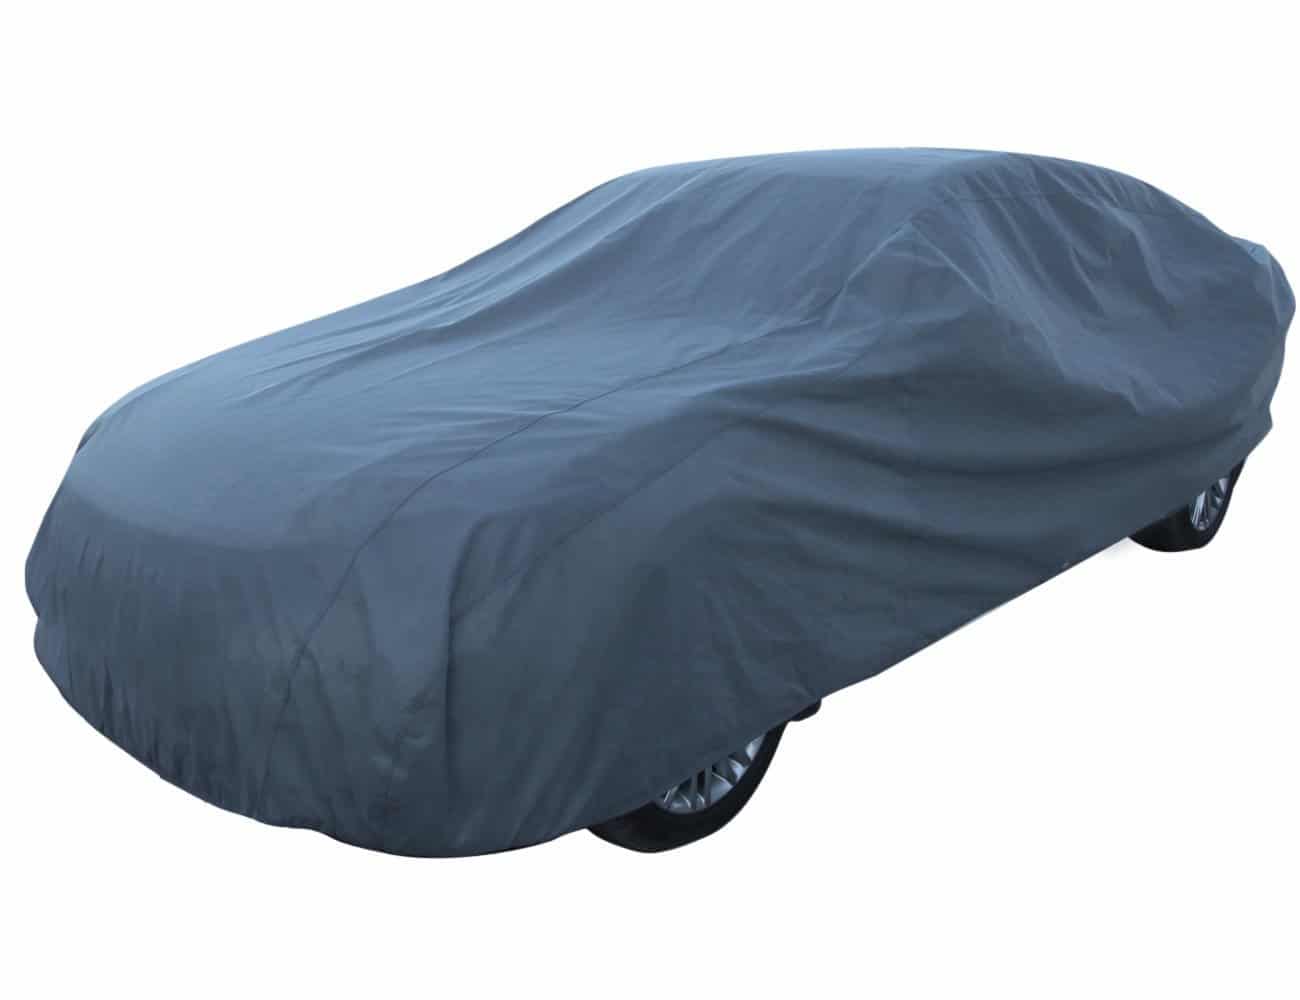 Review of Big Ant Waterproof Car Cover